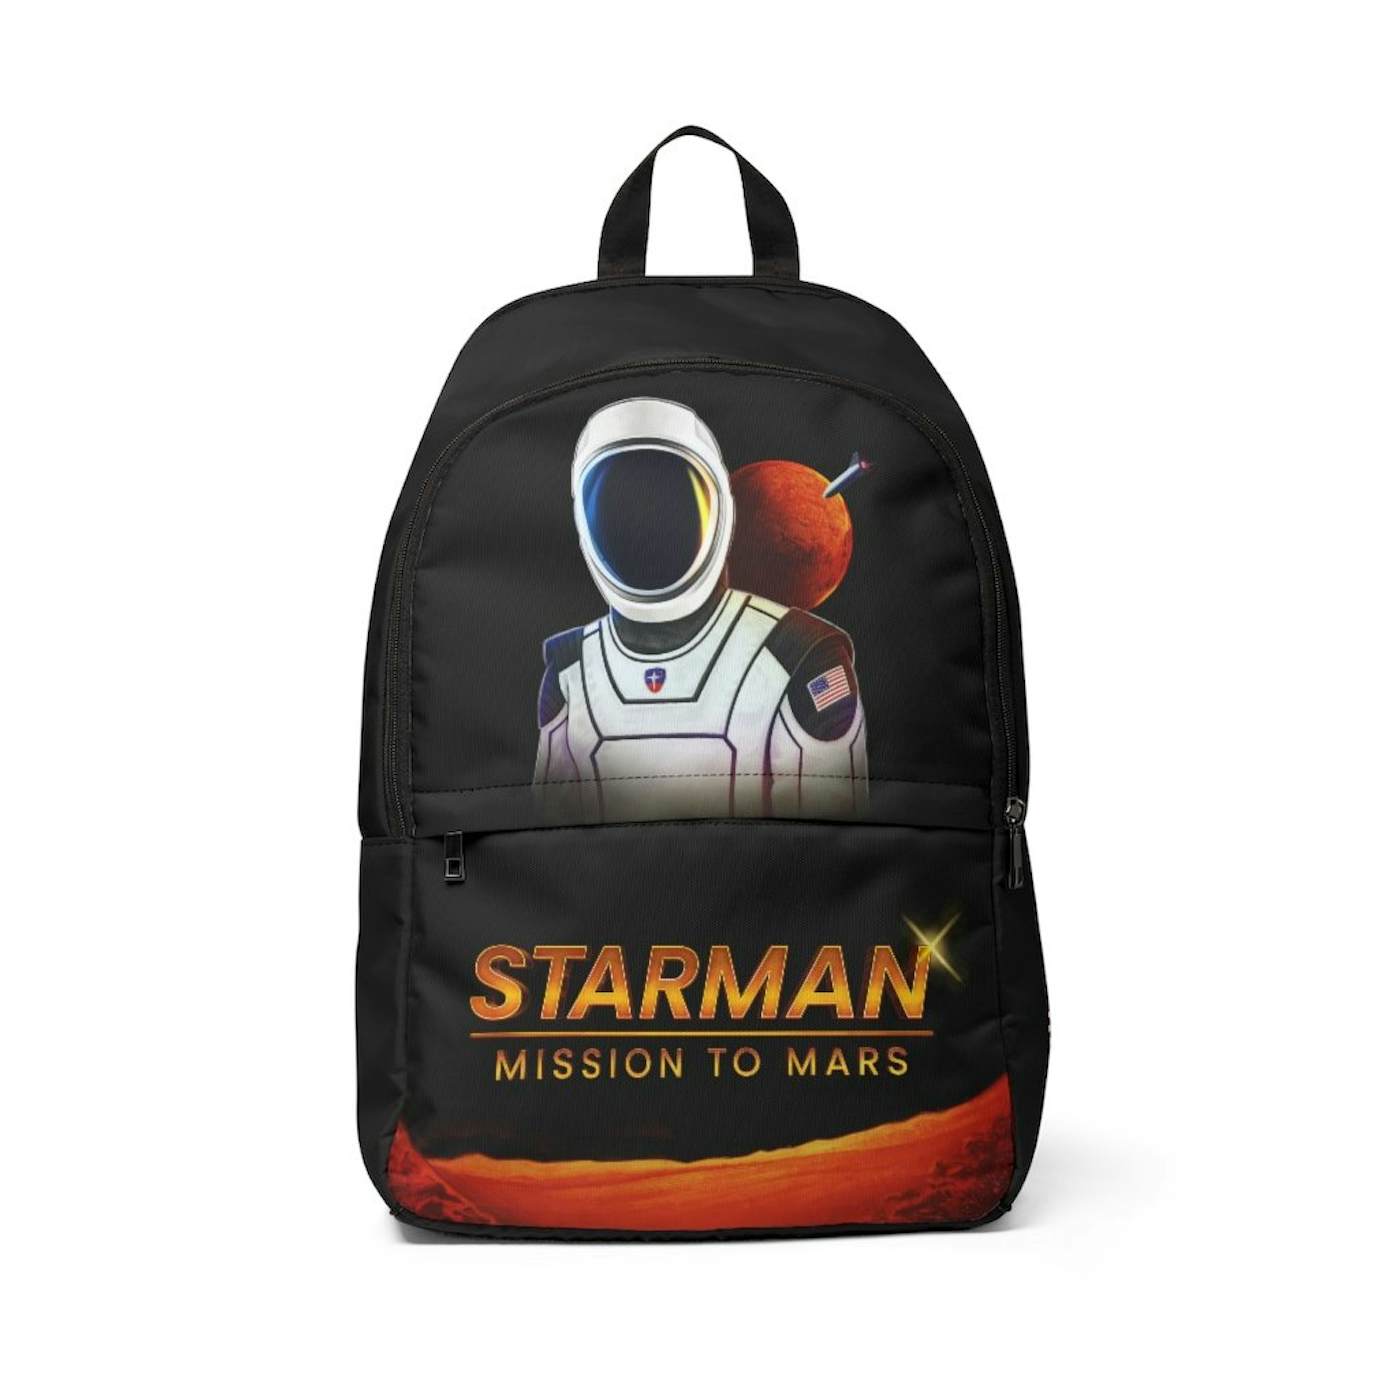 Joe Steven Starman Backpack